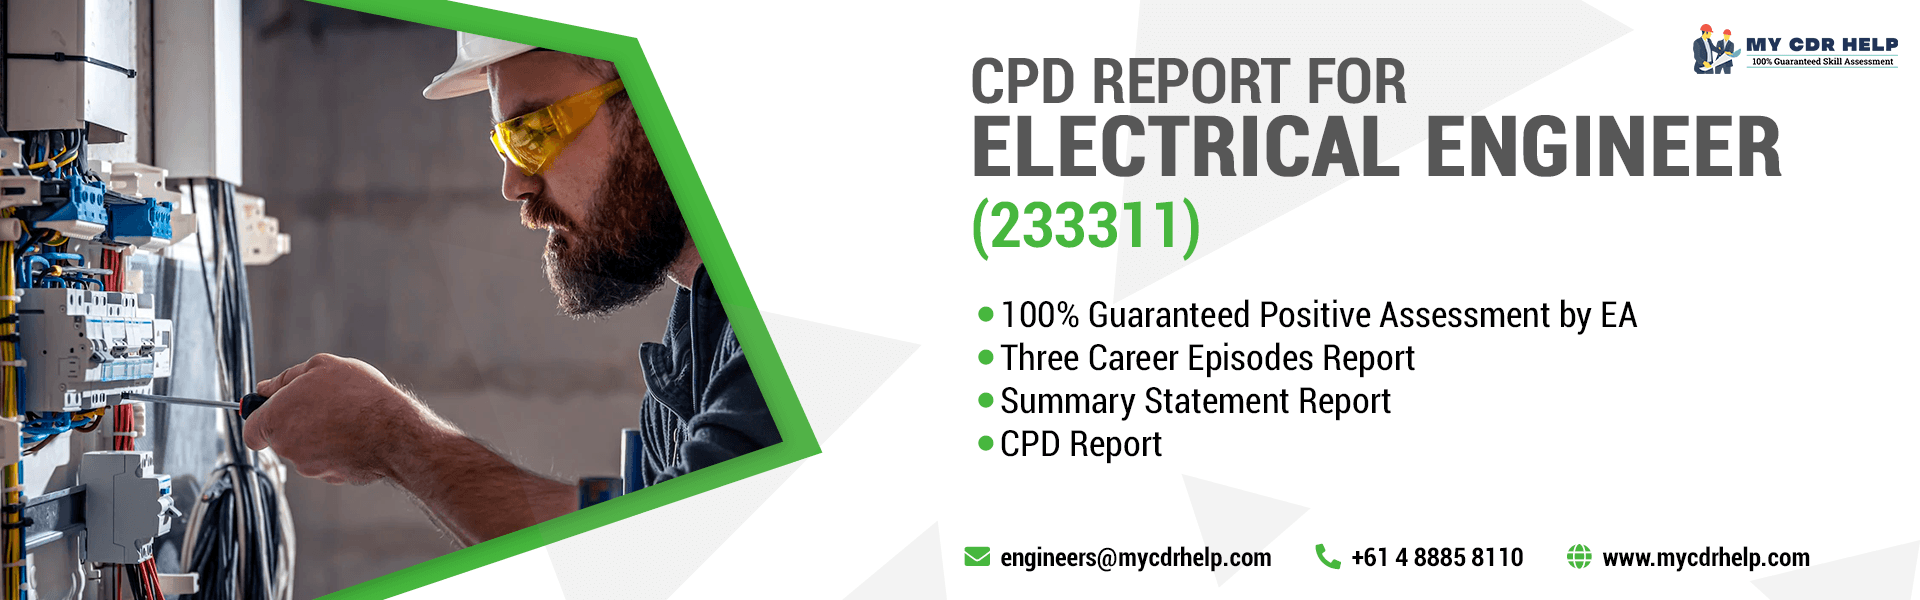 Electrical-engineer-CDR-sample